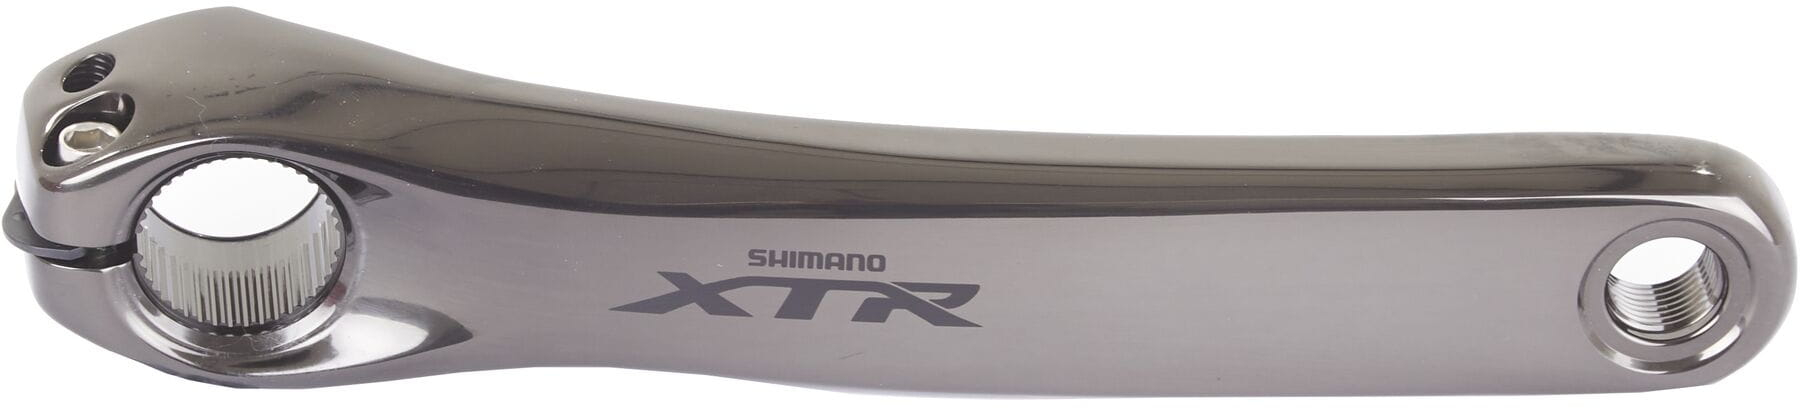 Shimano  FC-M9020 left hand crank arm 170 MM LEFT